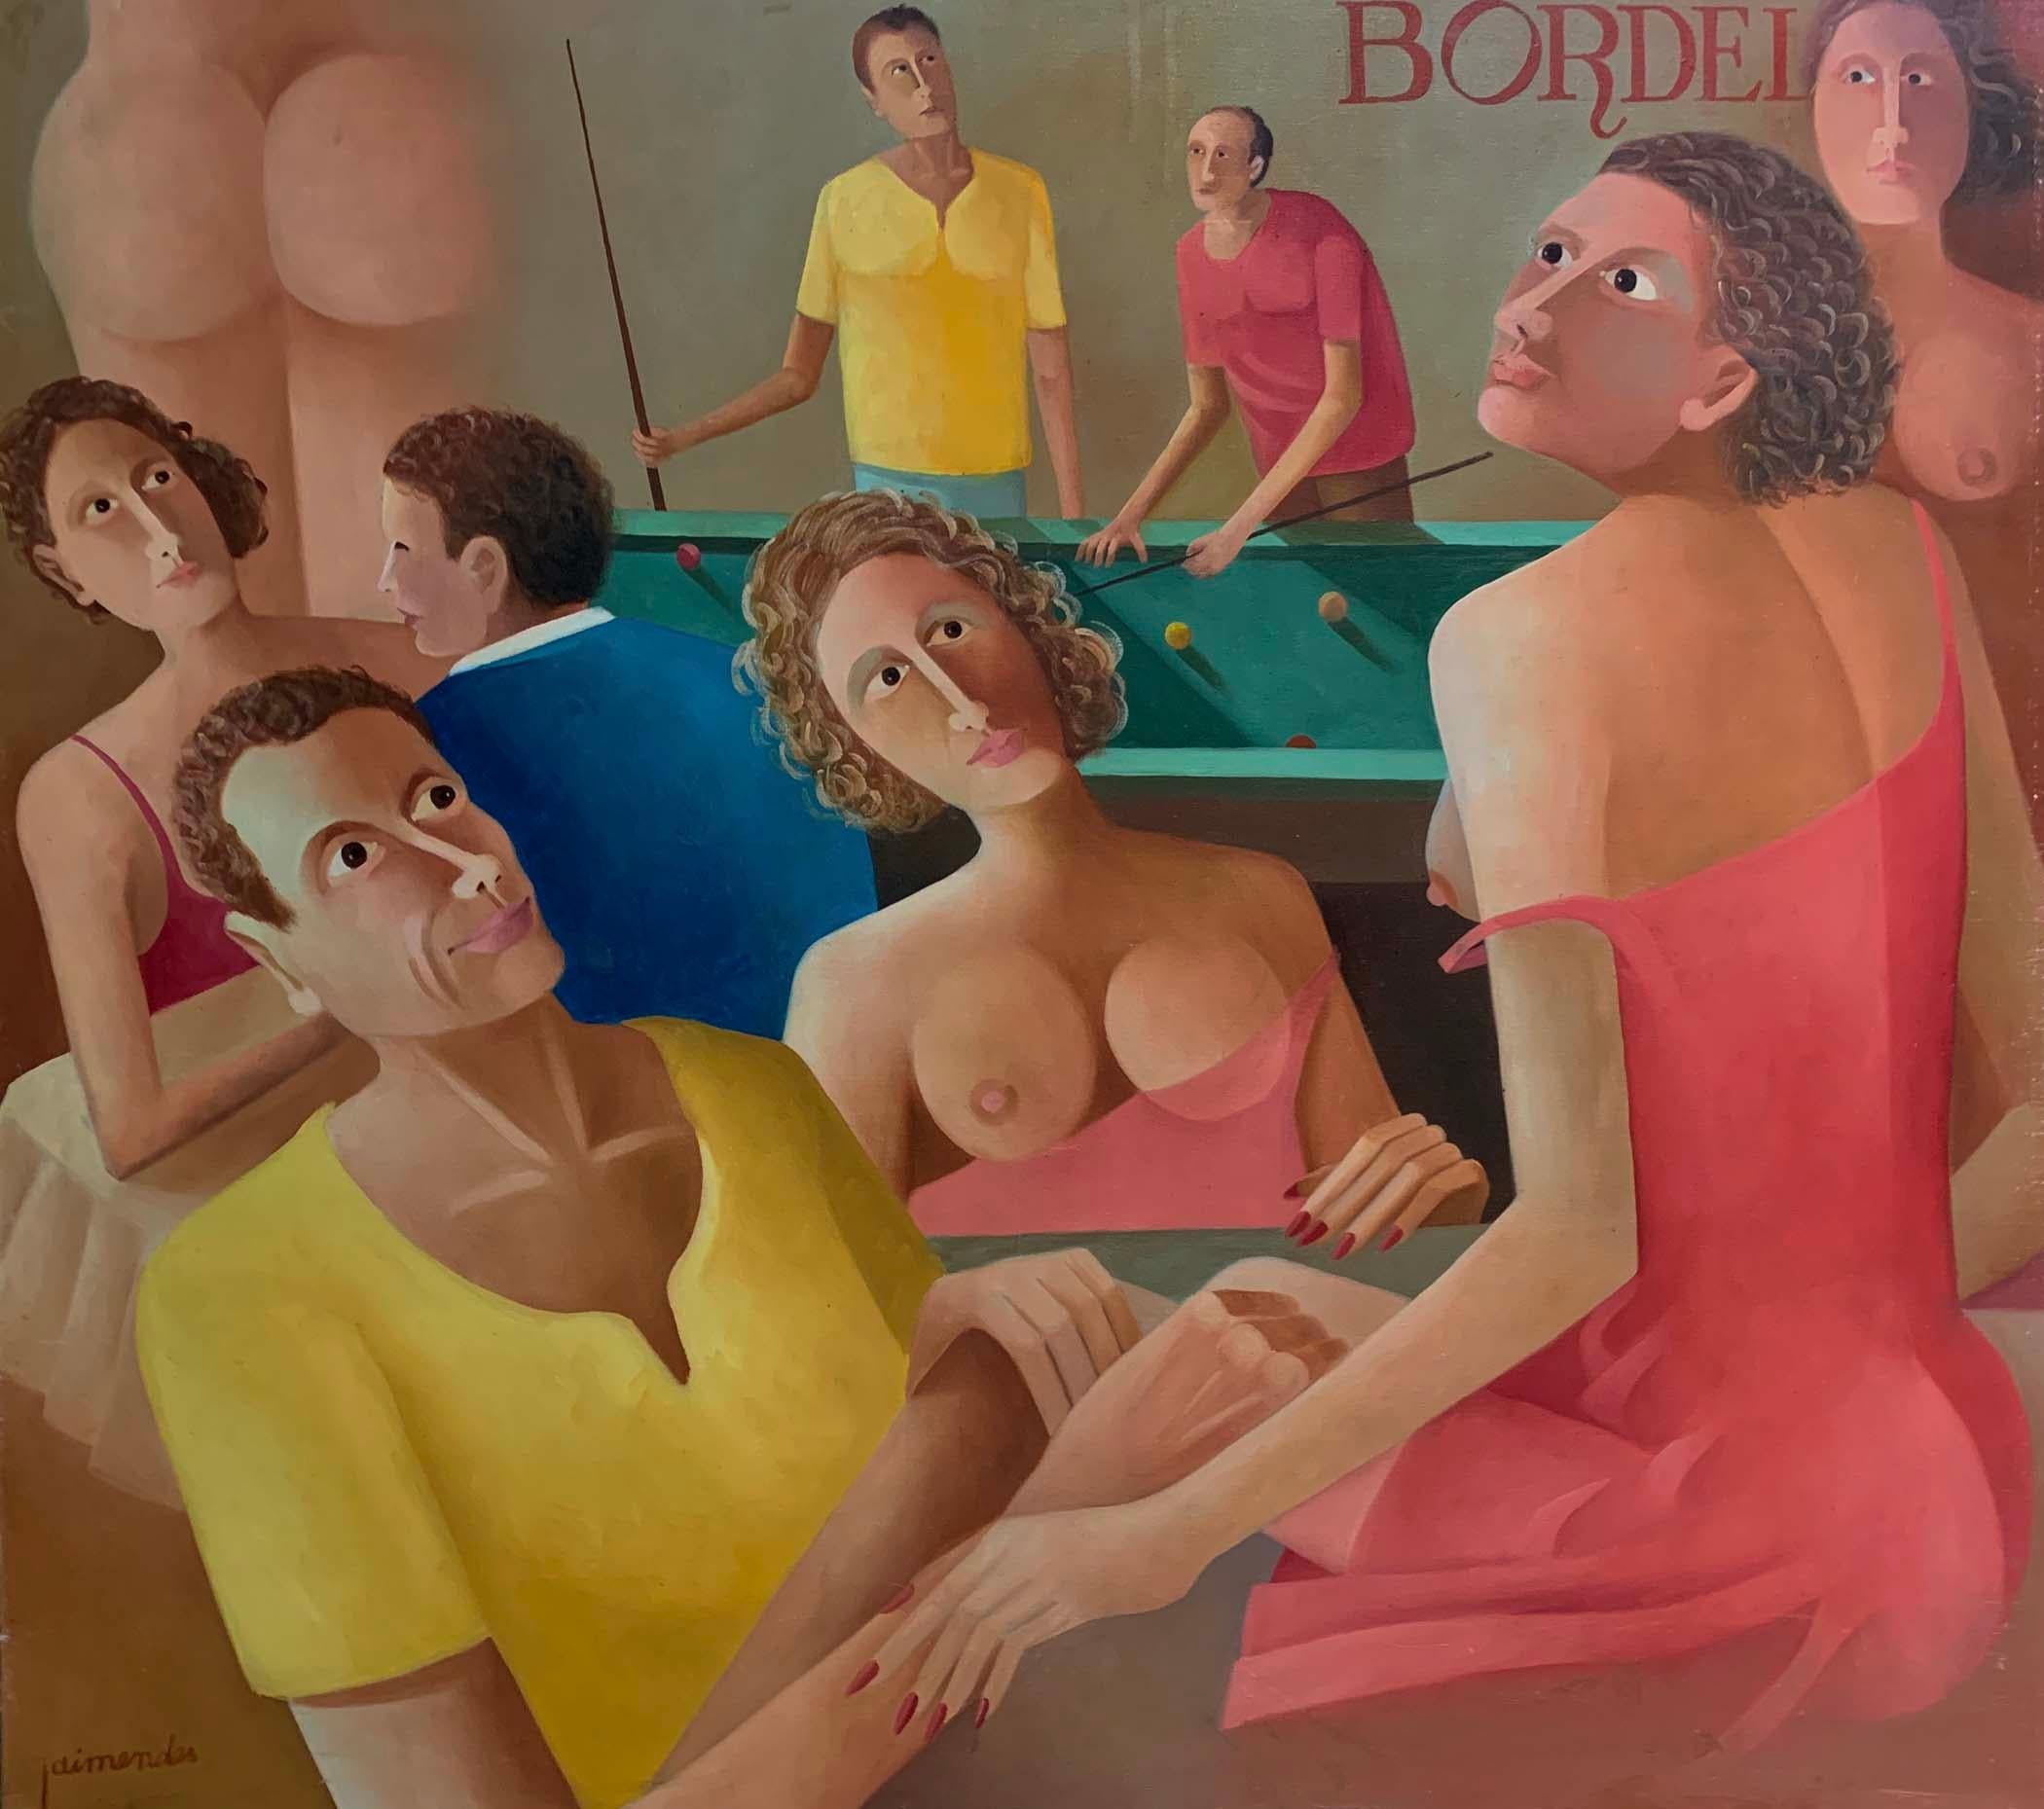 Jaimendes Nude Painting - BORDEL